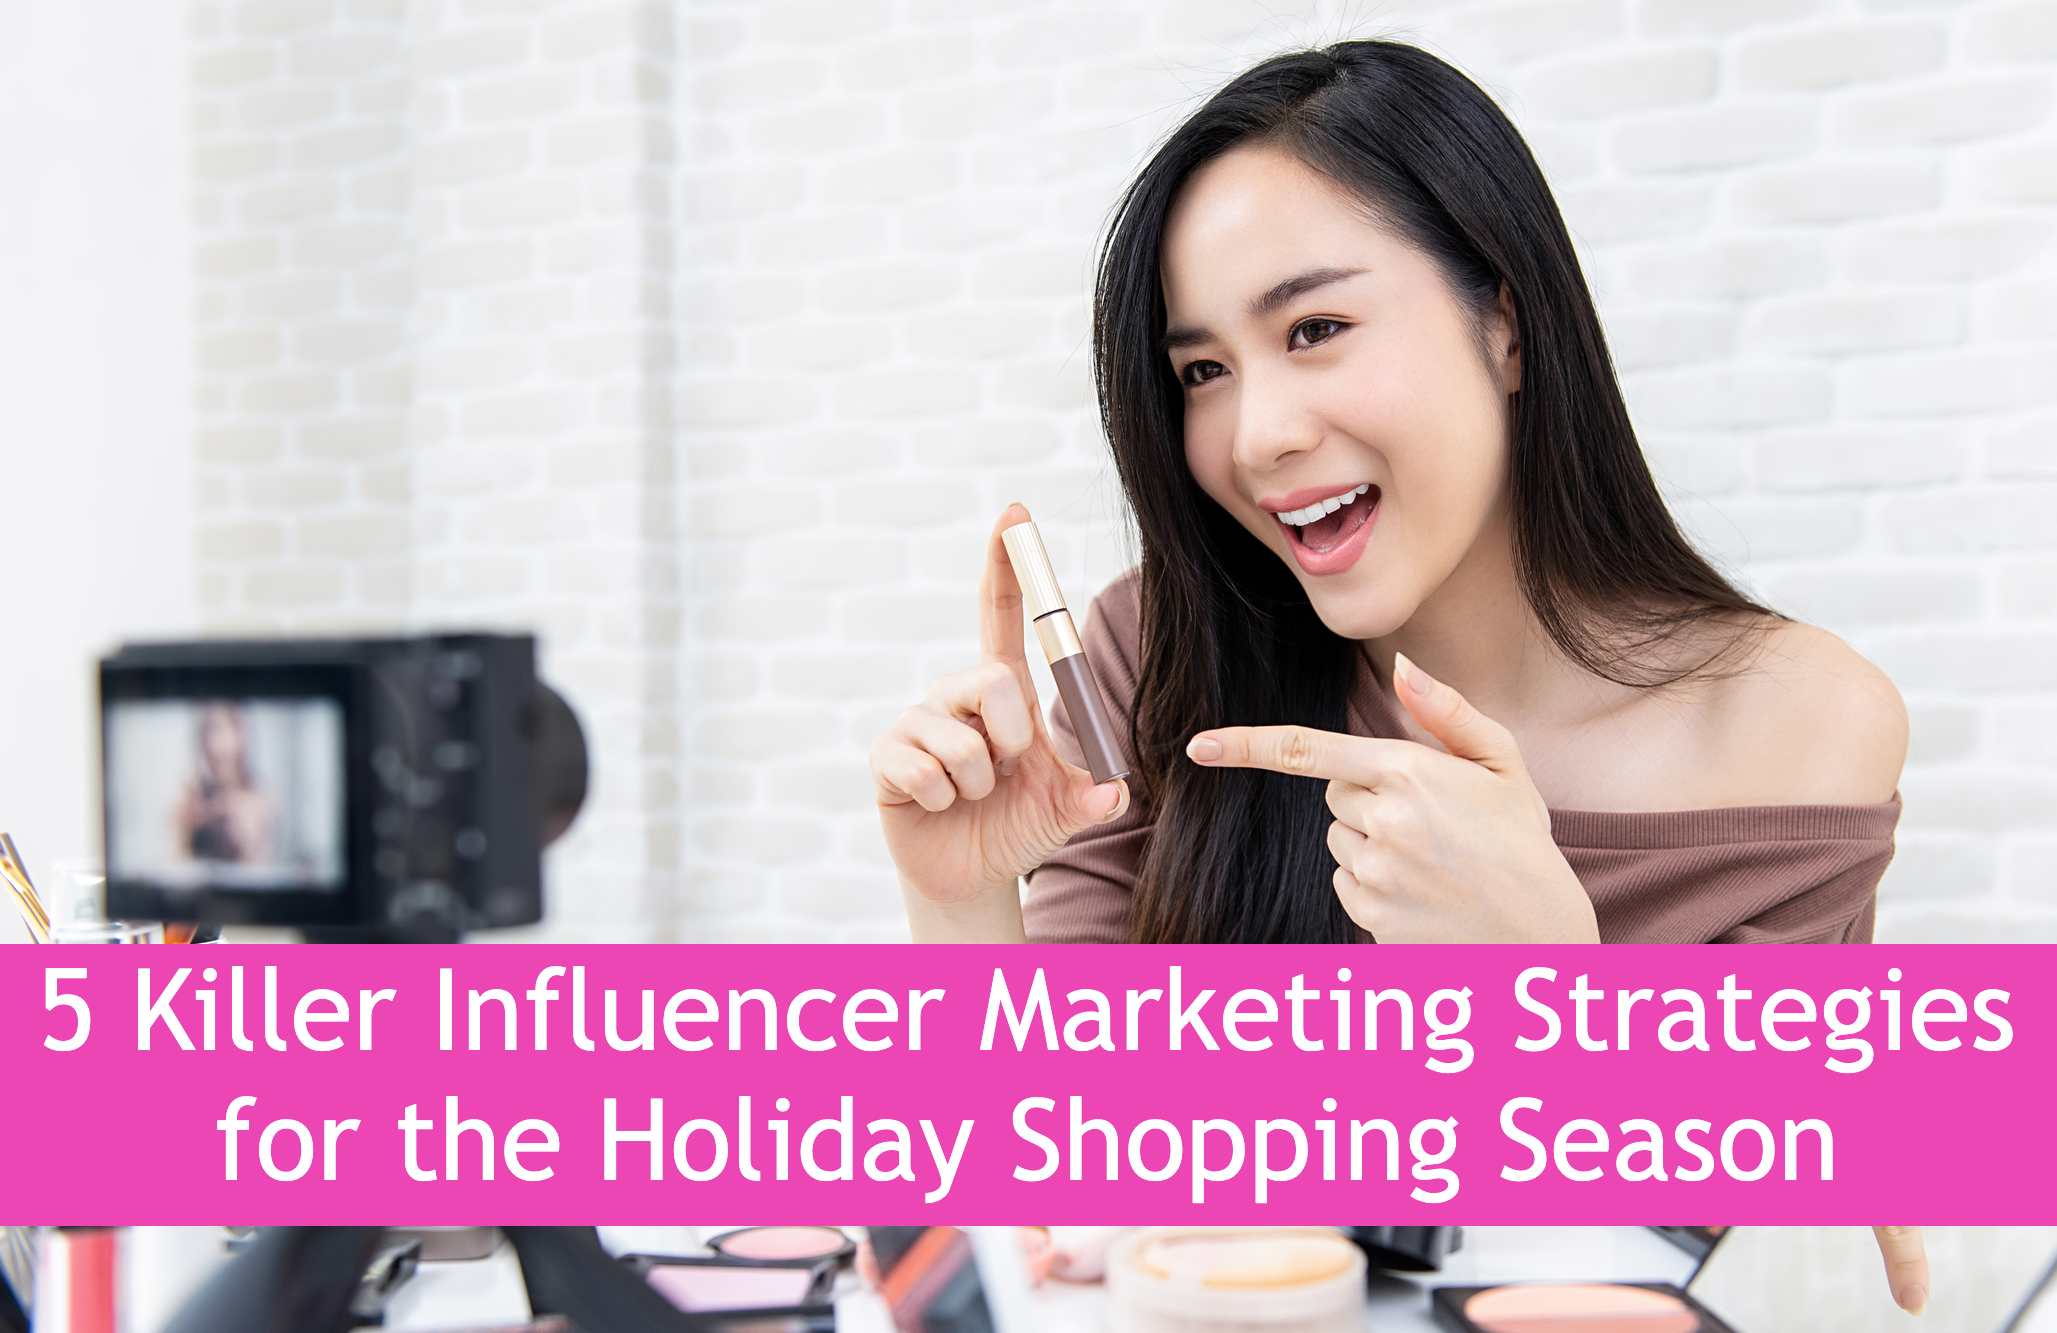 5 Killer Influencer Marketing Strategies for the Holiday Shopping Season